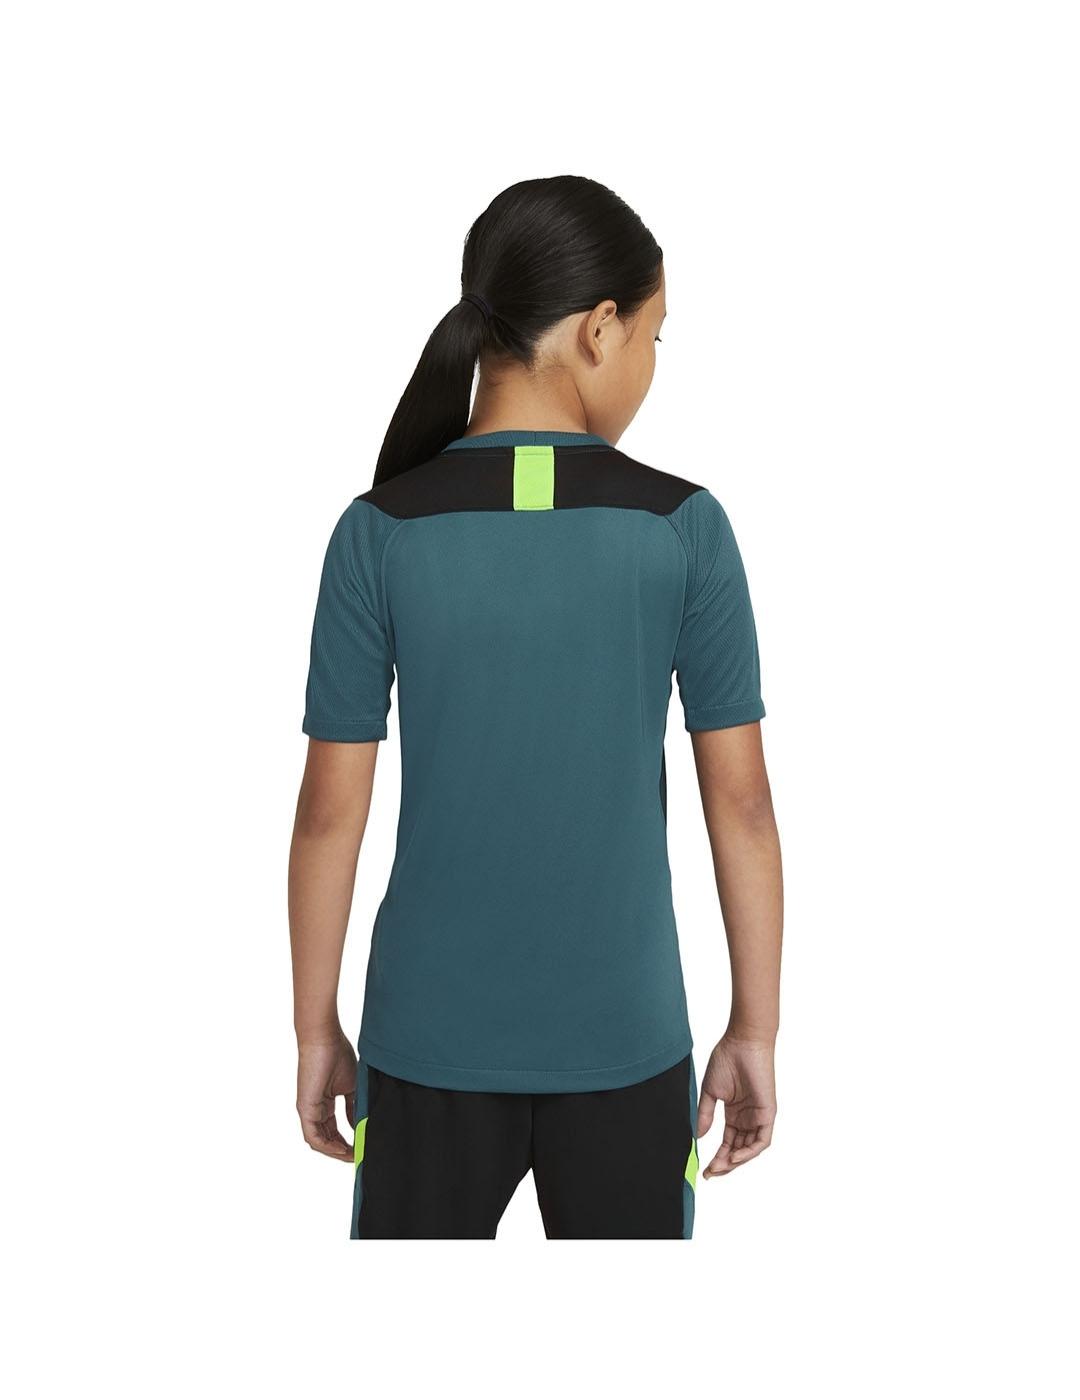 Camiseta Niñ@ Nike Dry Academy Verde